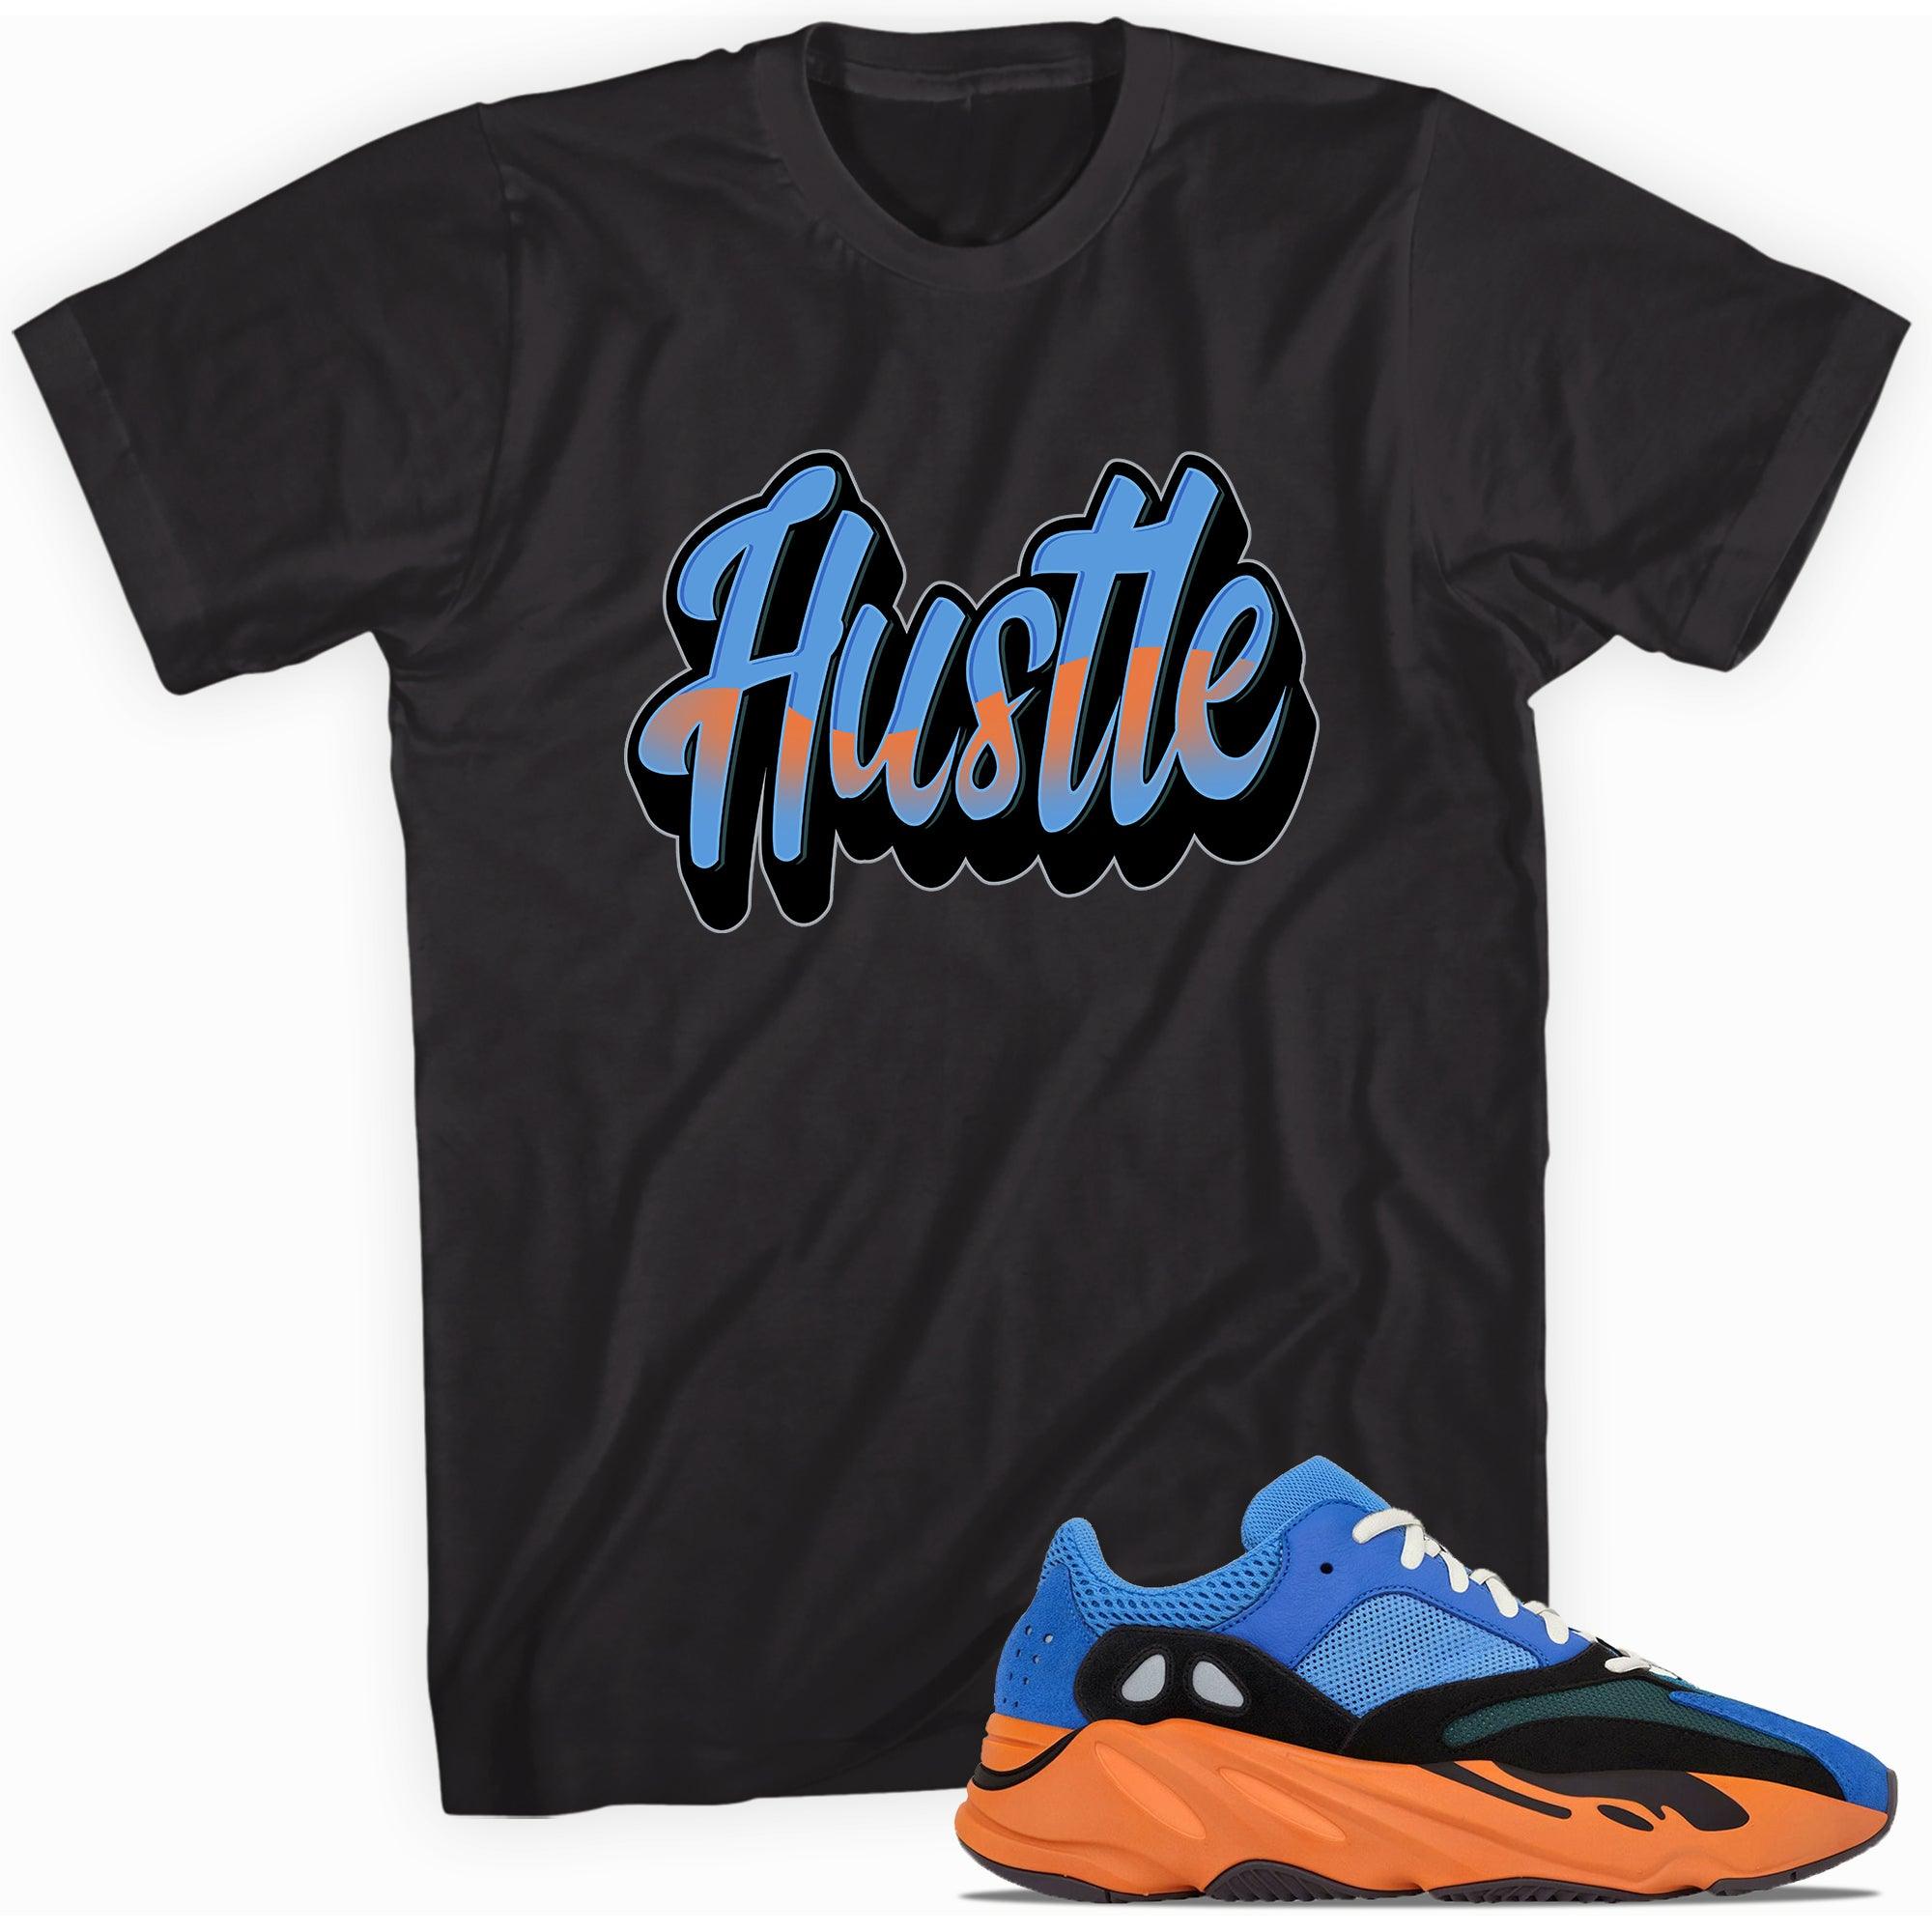 Black Hustle Shirt Yeezy Boost 700s Bright Blue photo